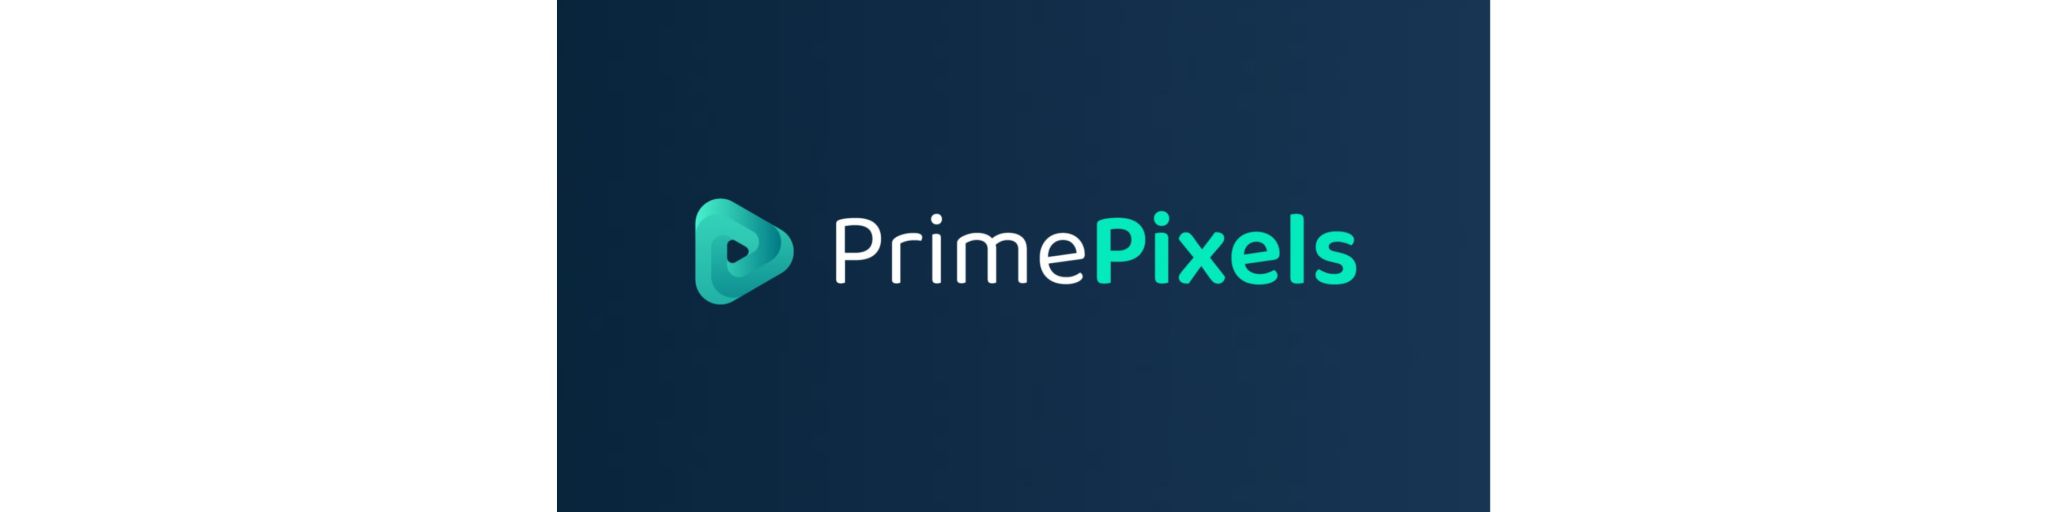 Prime Pixel